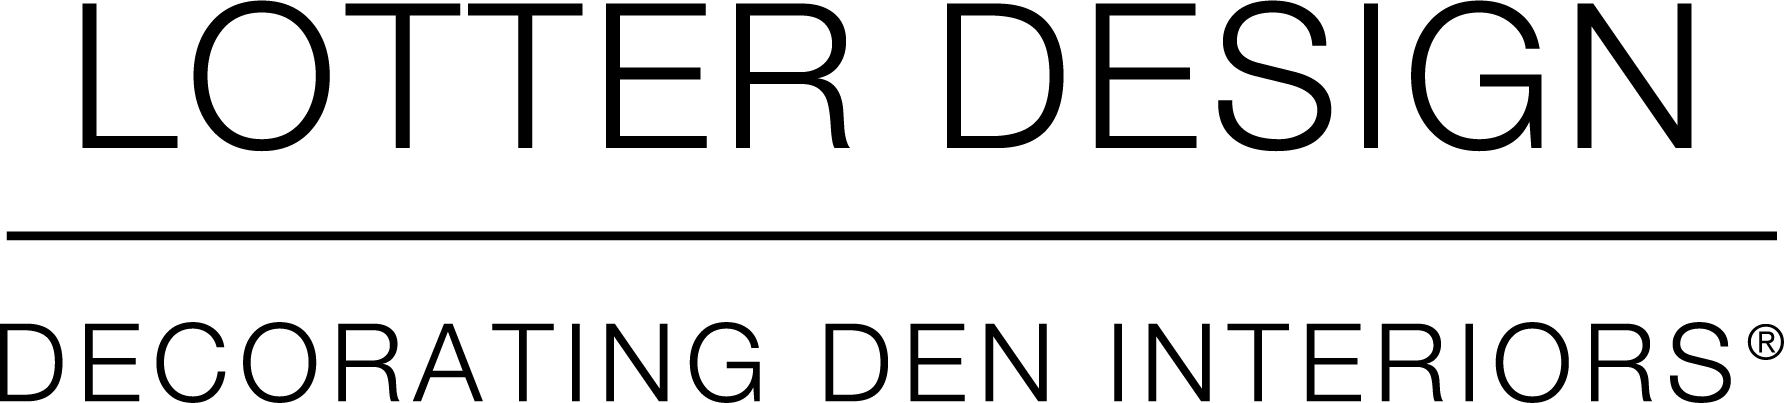 LOTTER DESIGN LLC Logo